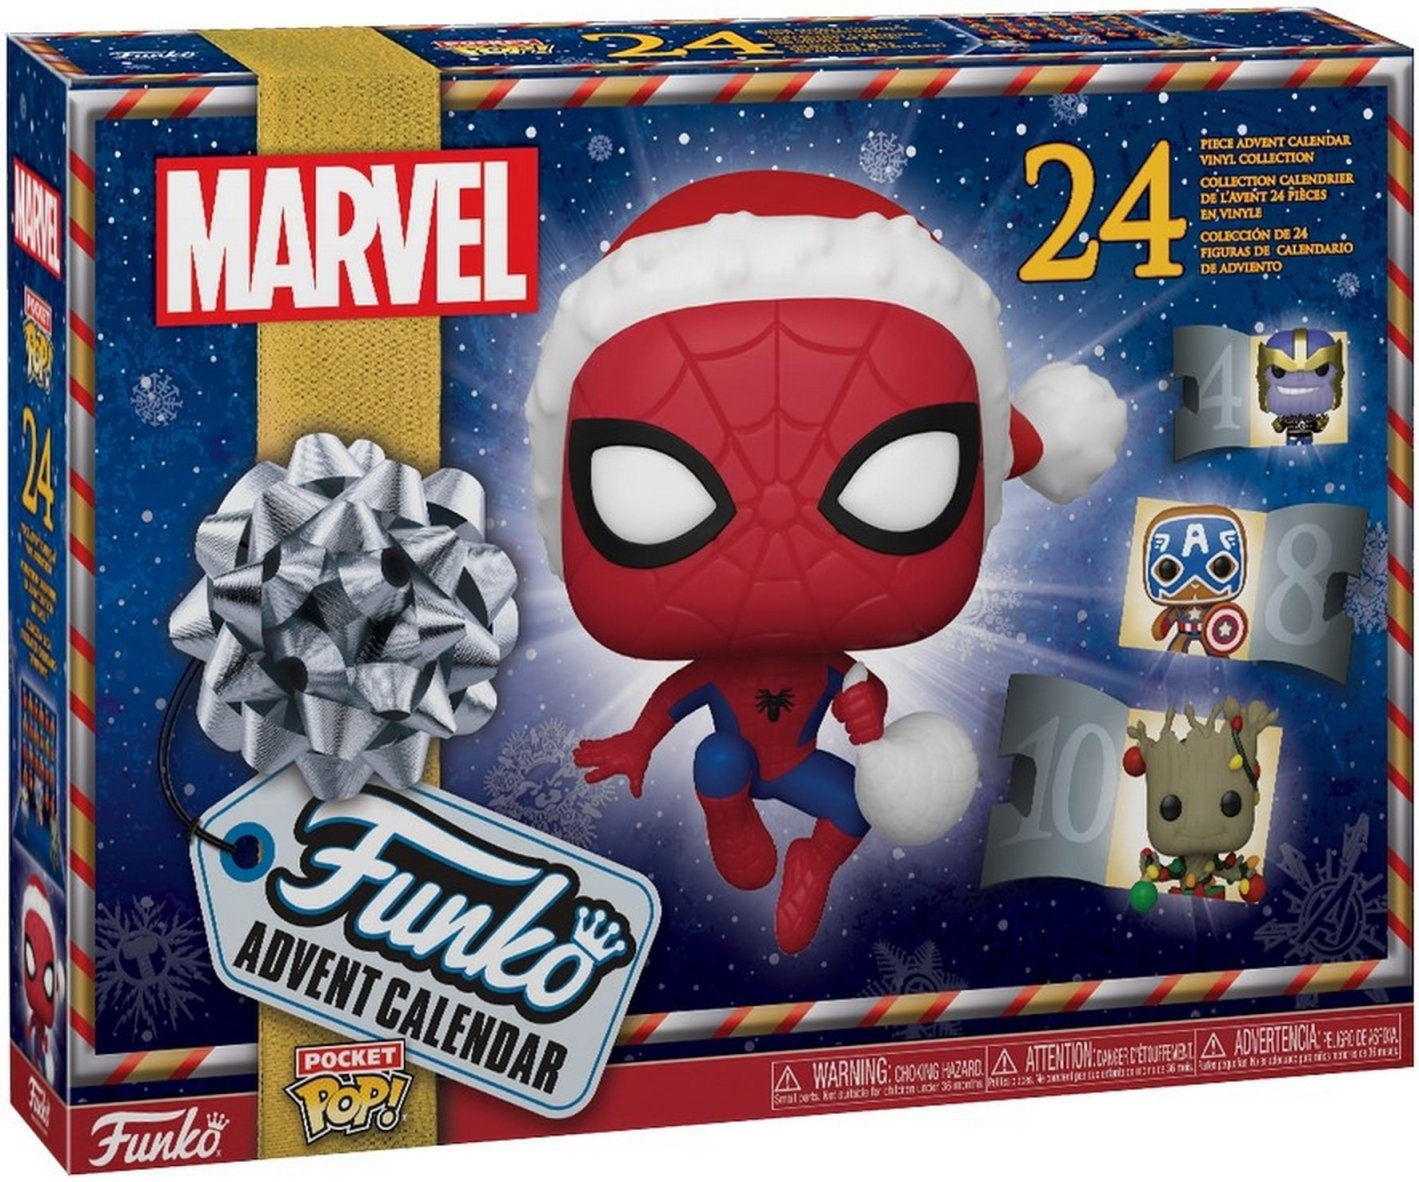 Funko Adventskalender Marvel Adventskalender Holiday 24 Pocket Pop!